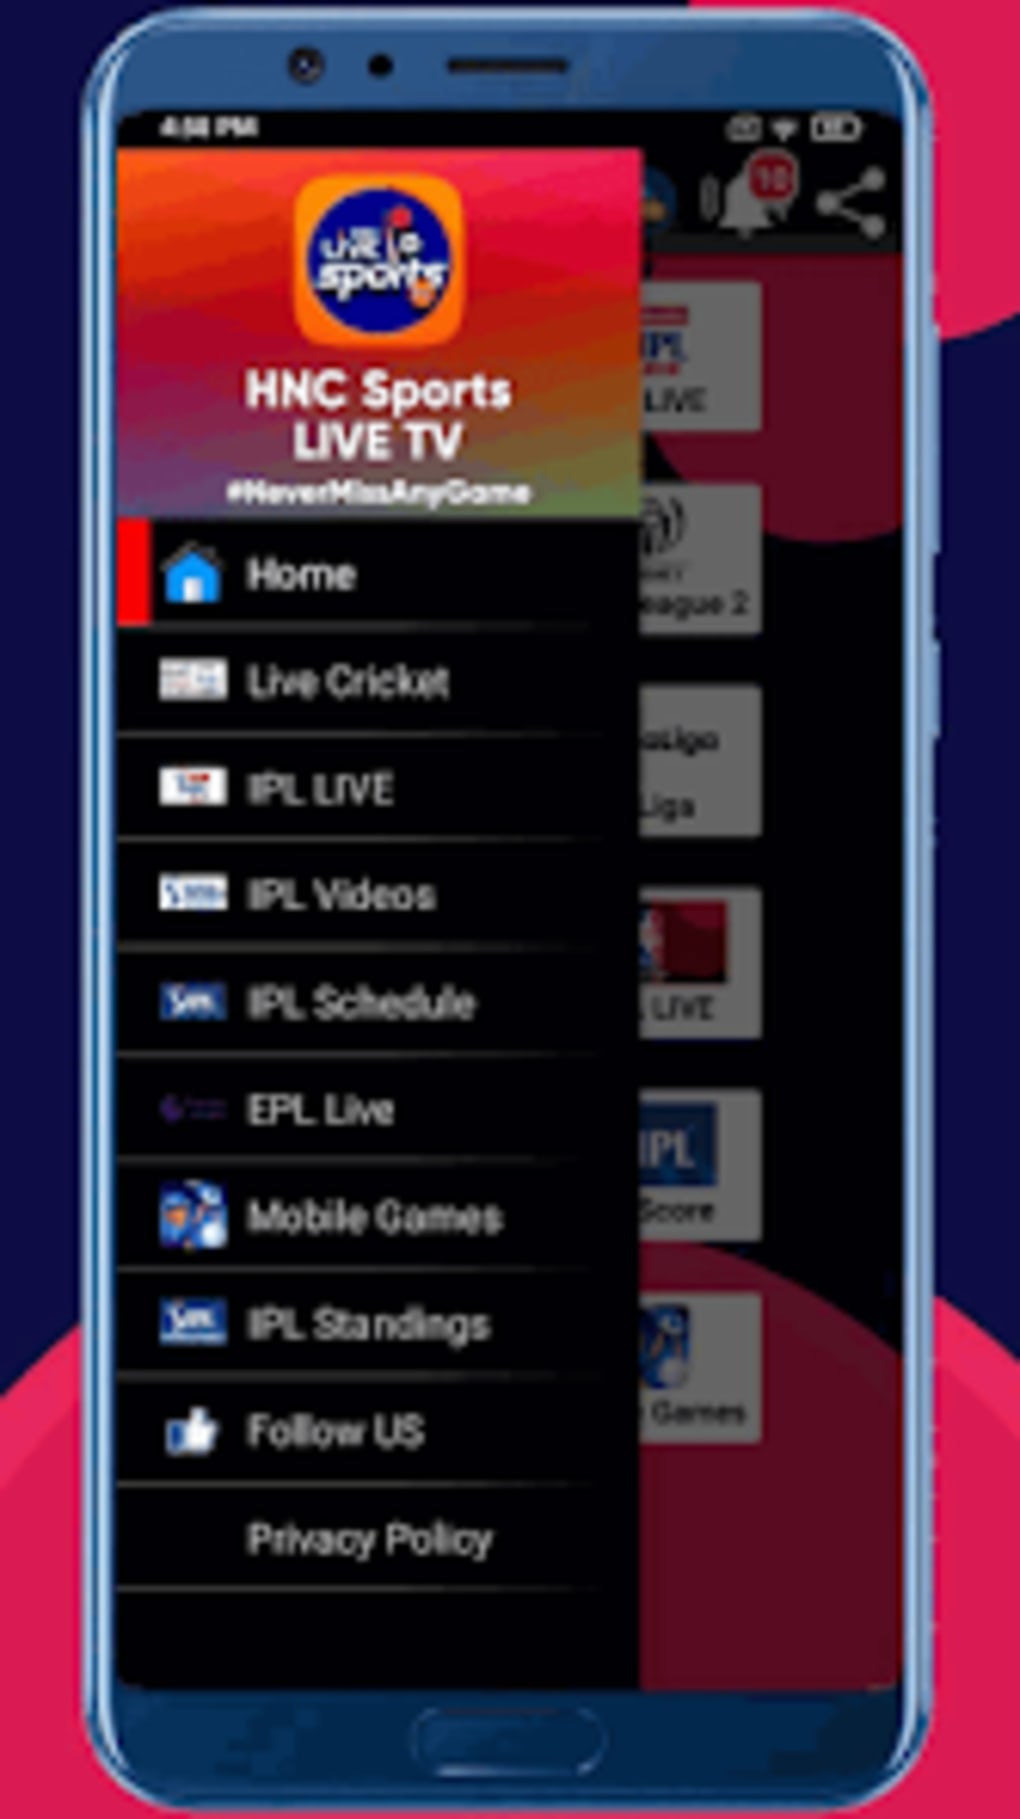 HNC SPORTS LIVE TV APK für Android